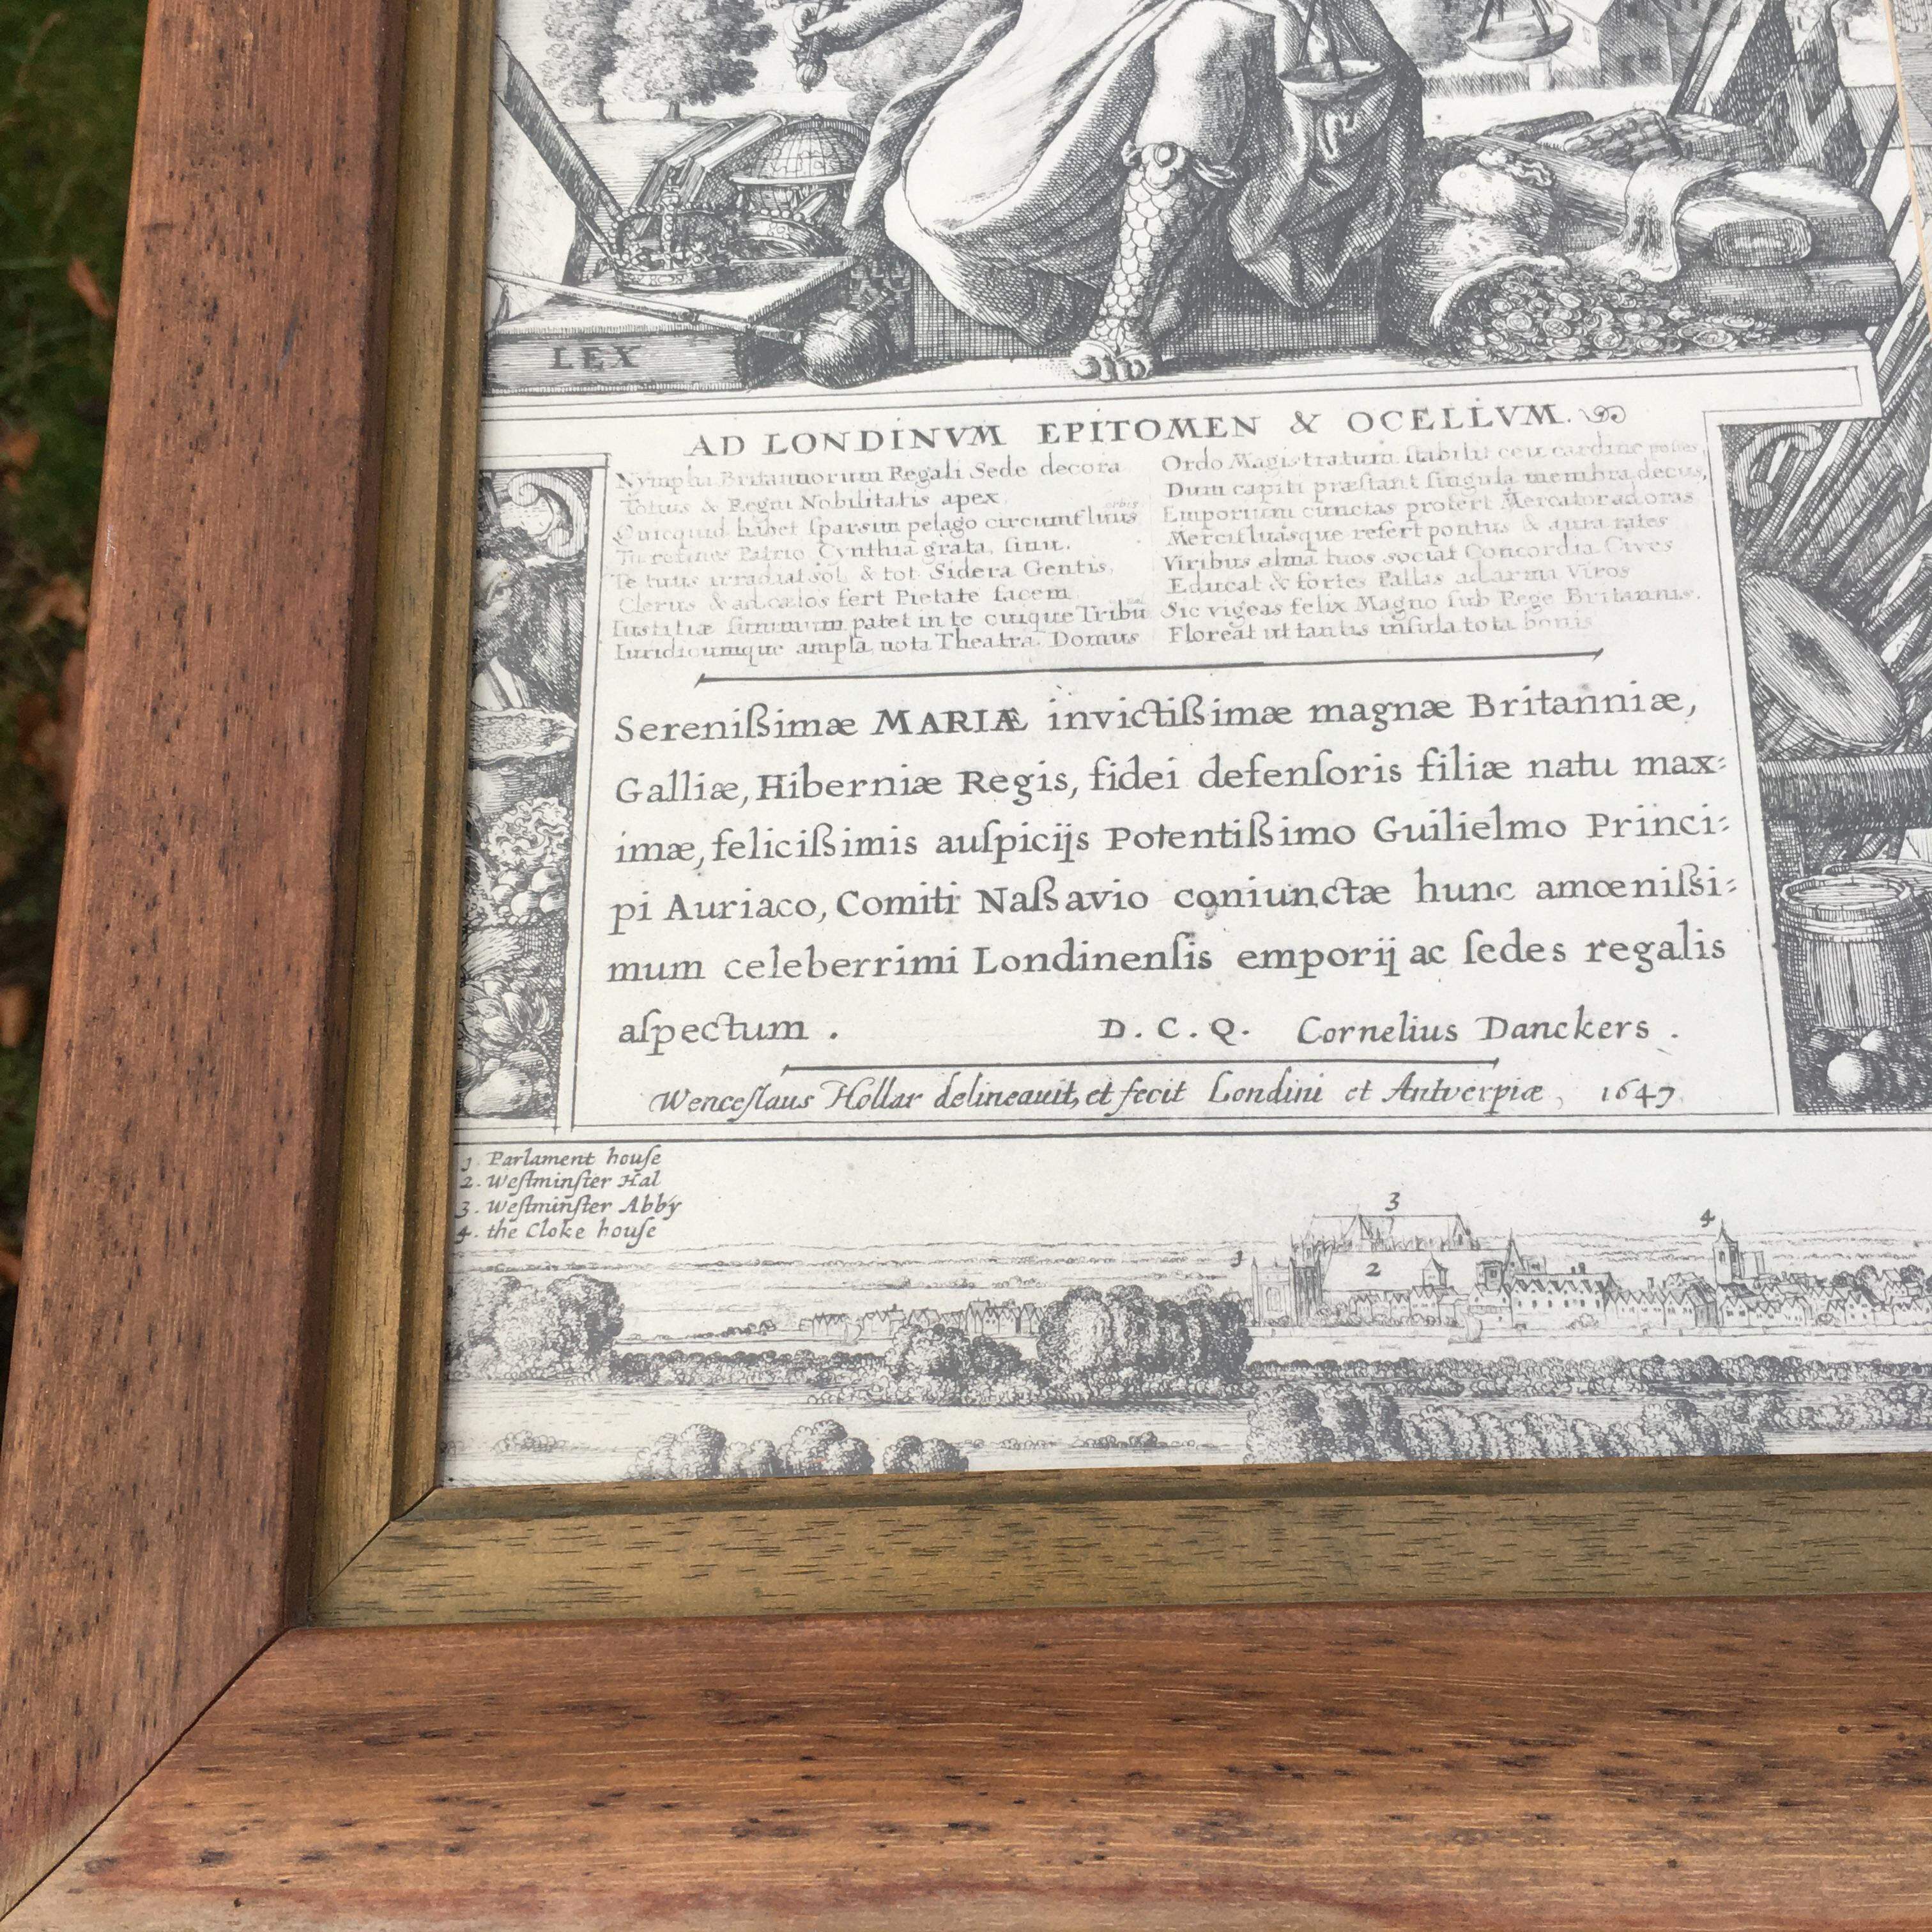 Framed London Skyline 1647 Reproduction Print